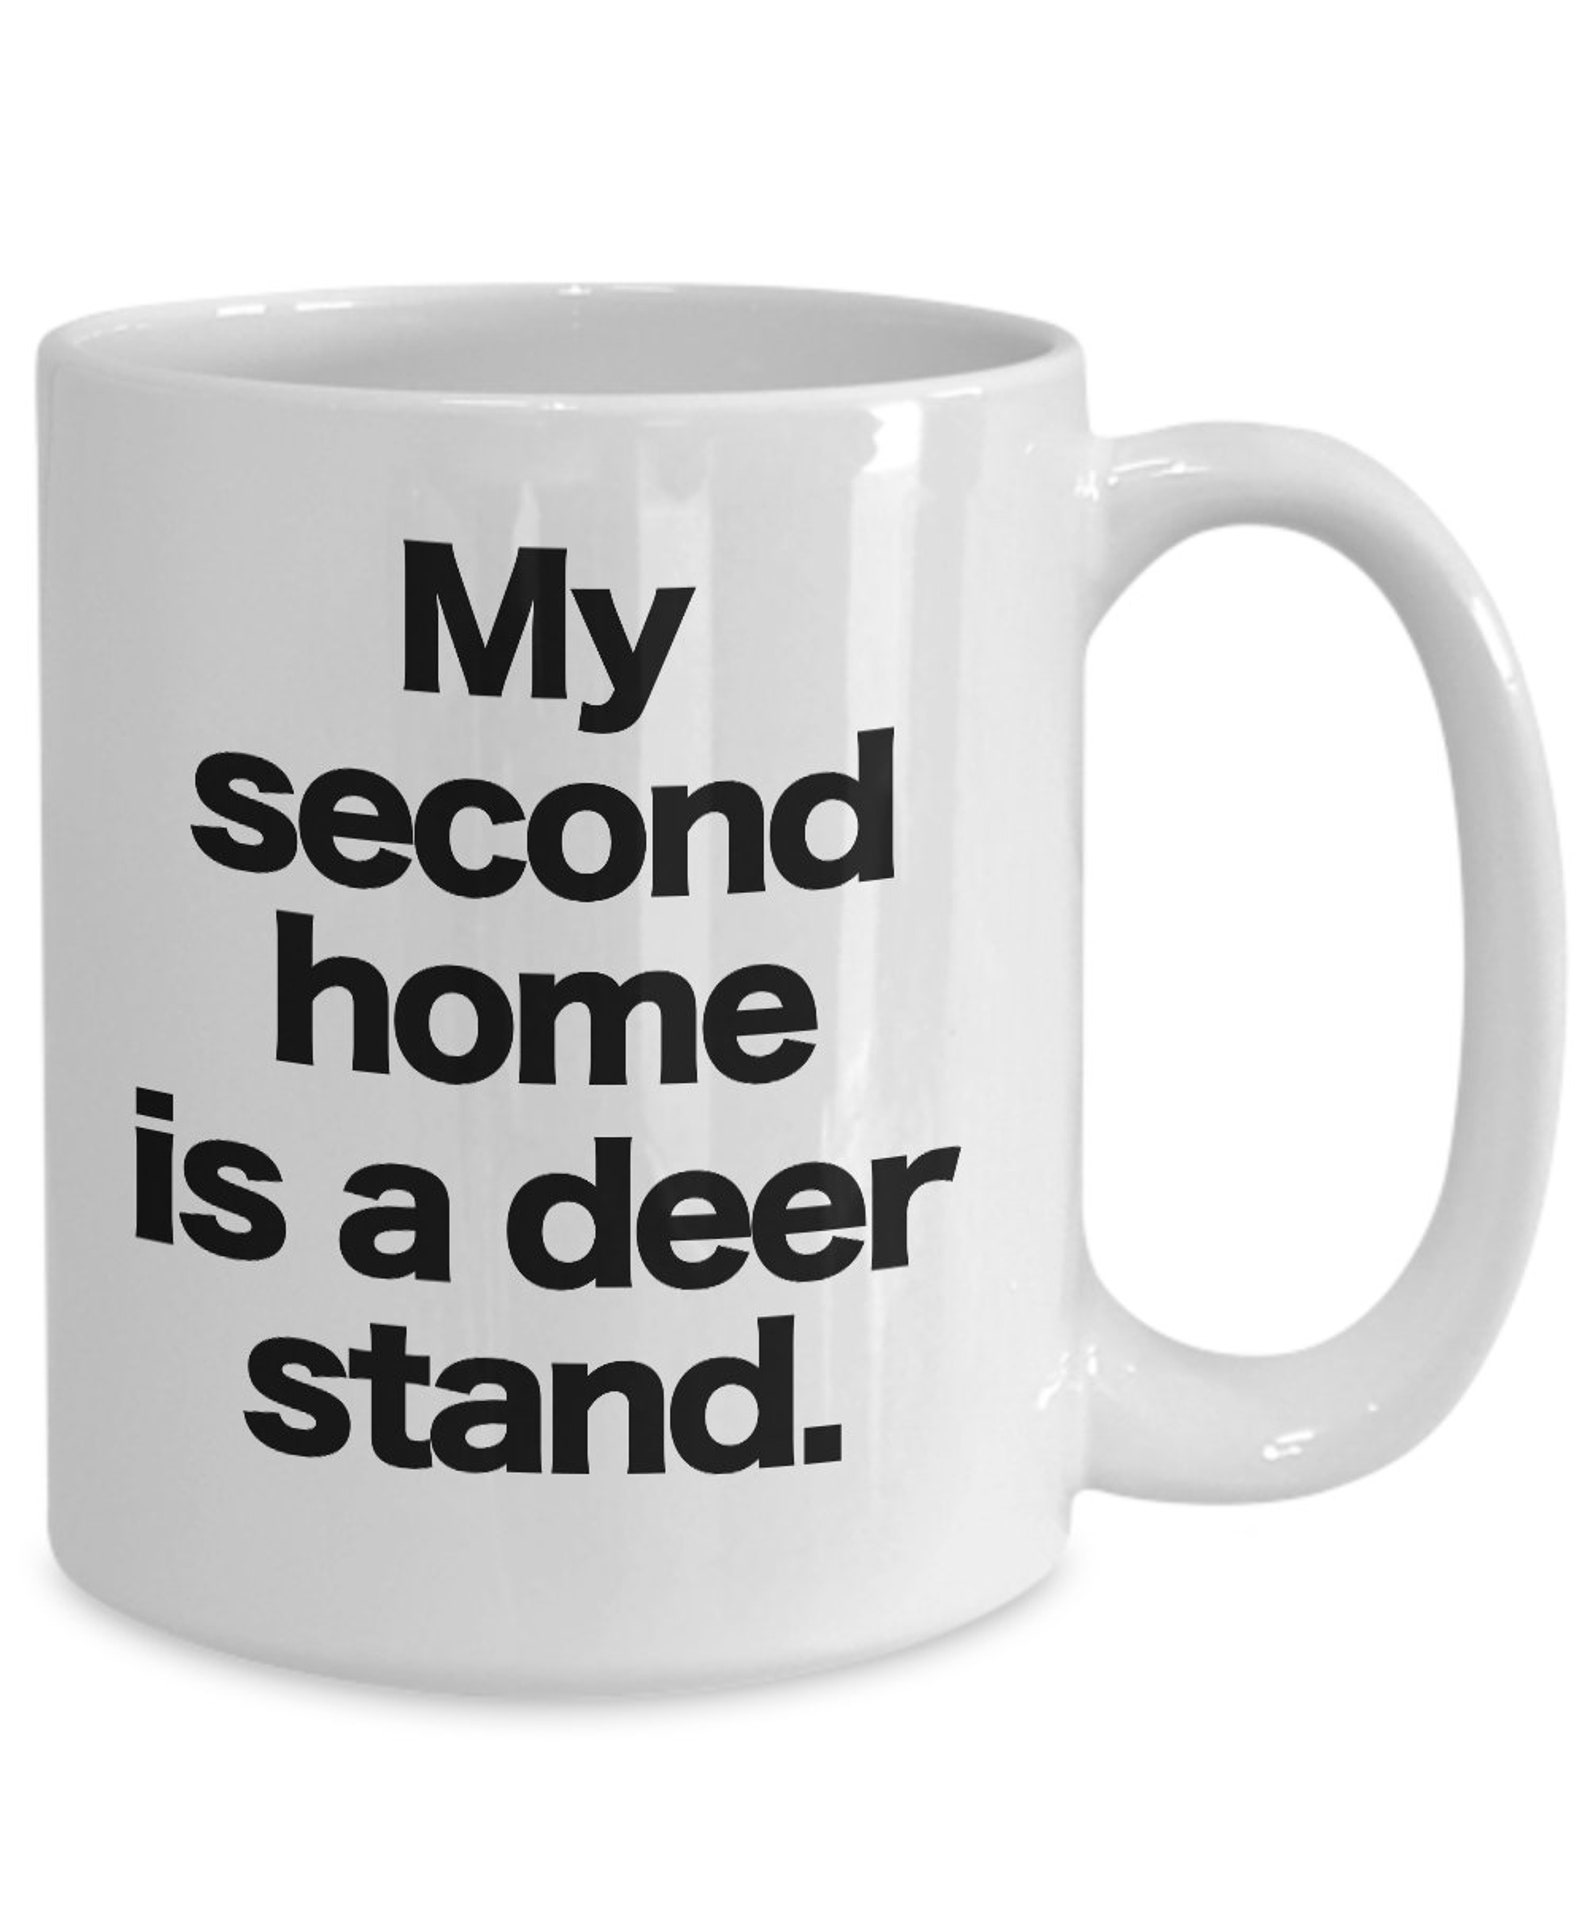 Deer hunting mug white coffee cup funny gift for hunter